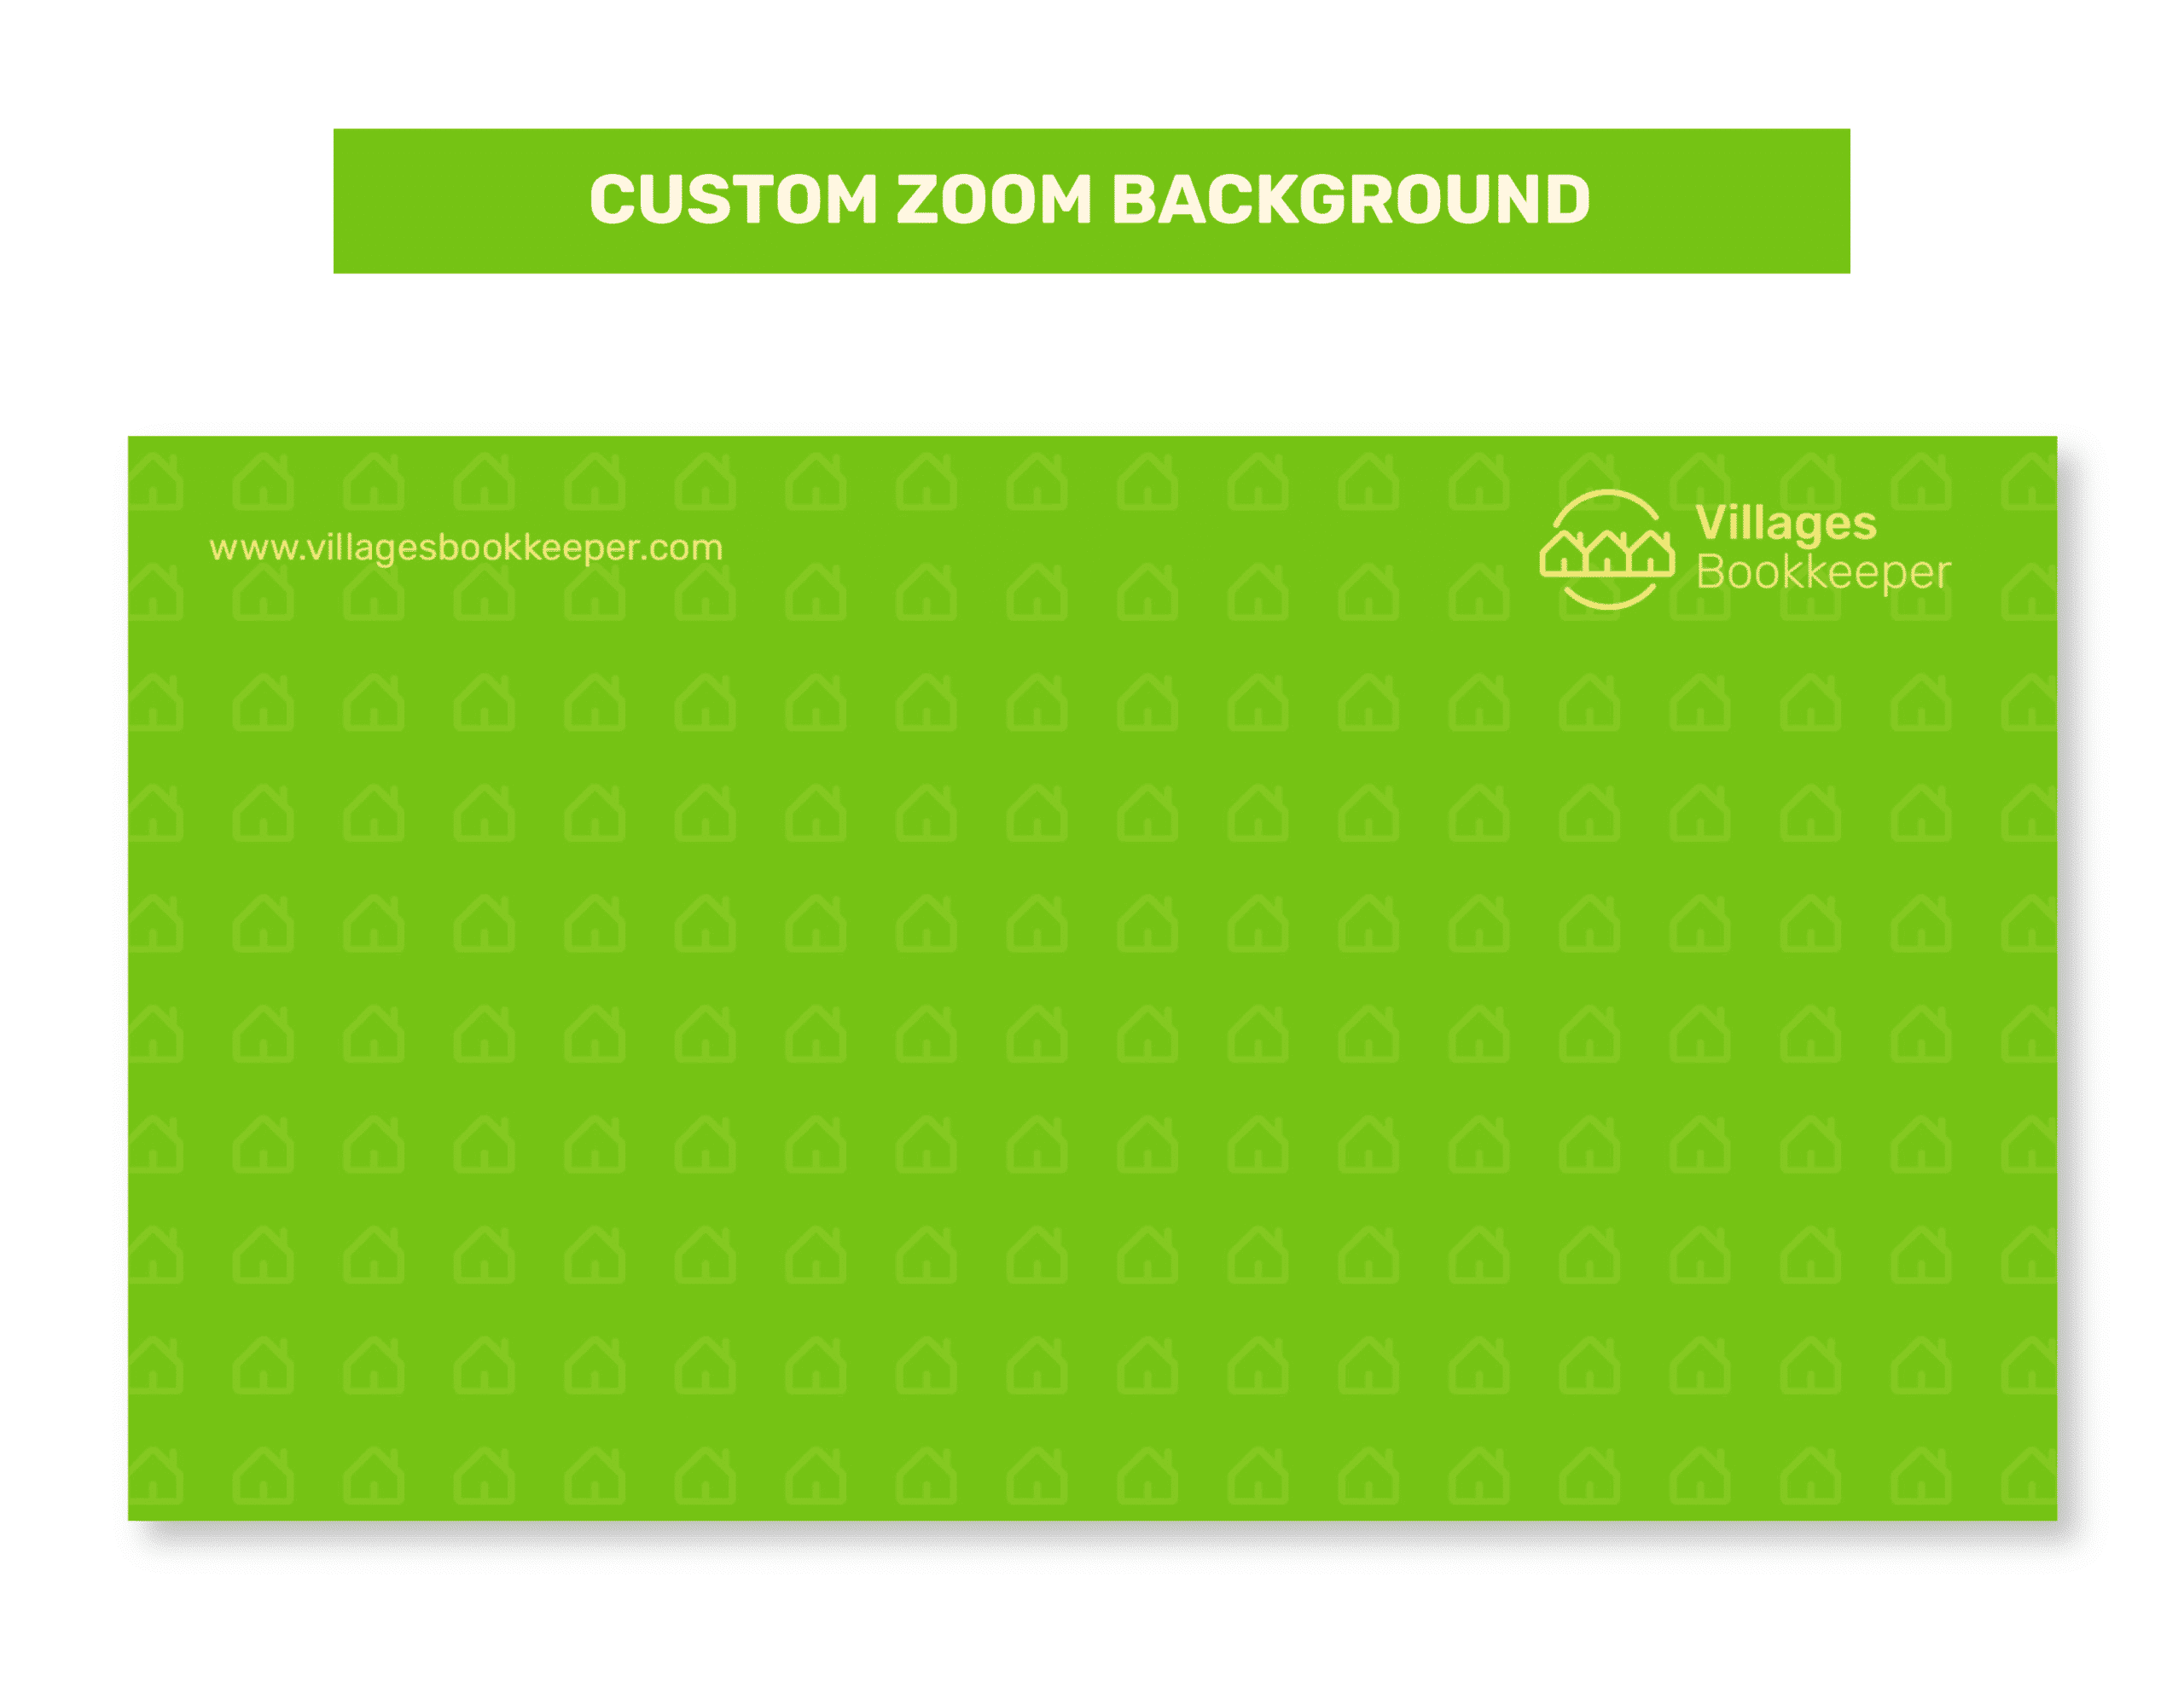 07Villages_Showcase_Custom Zoom Background